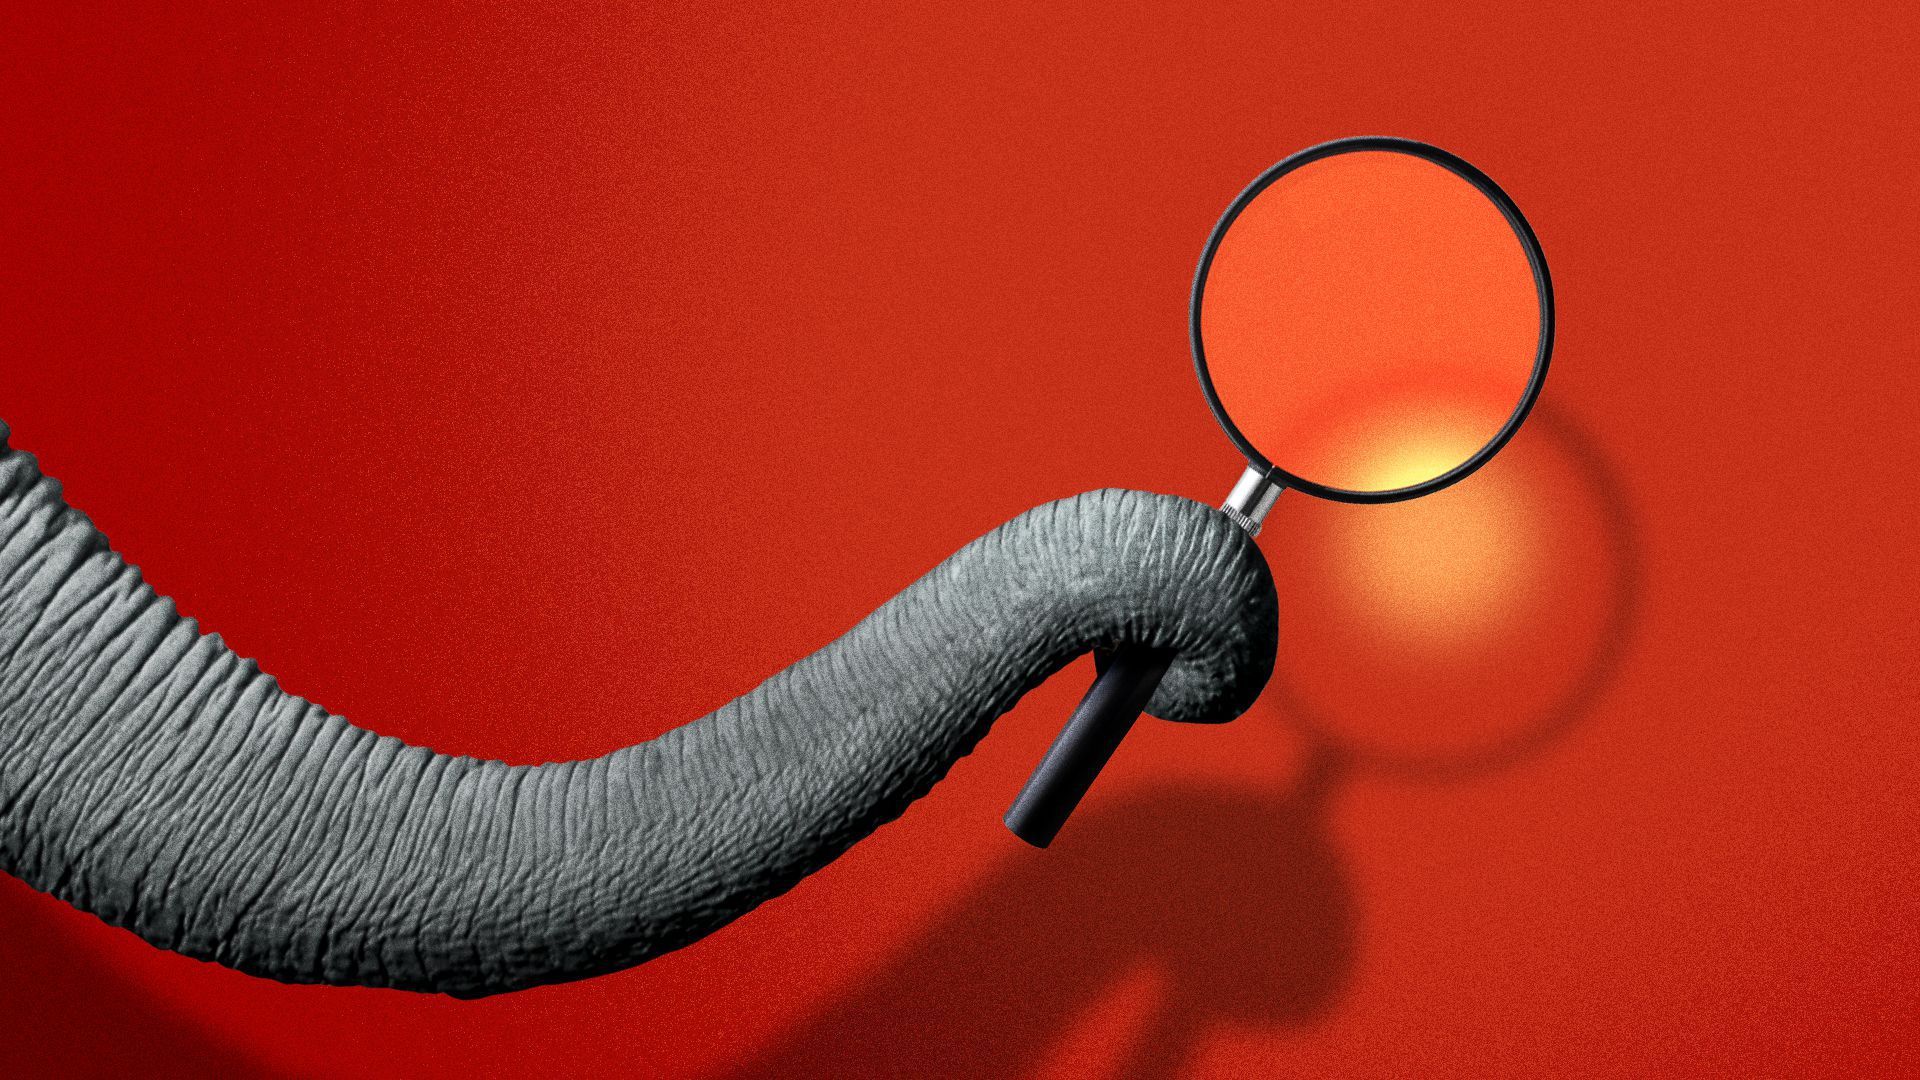 Elephant trunk holding magnifying glass